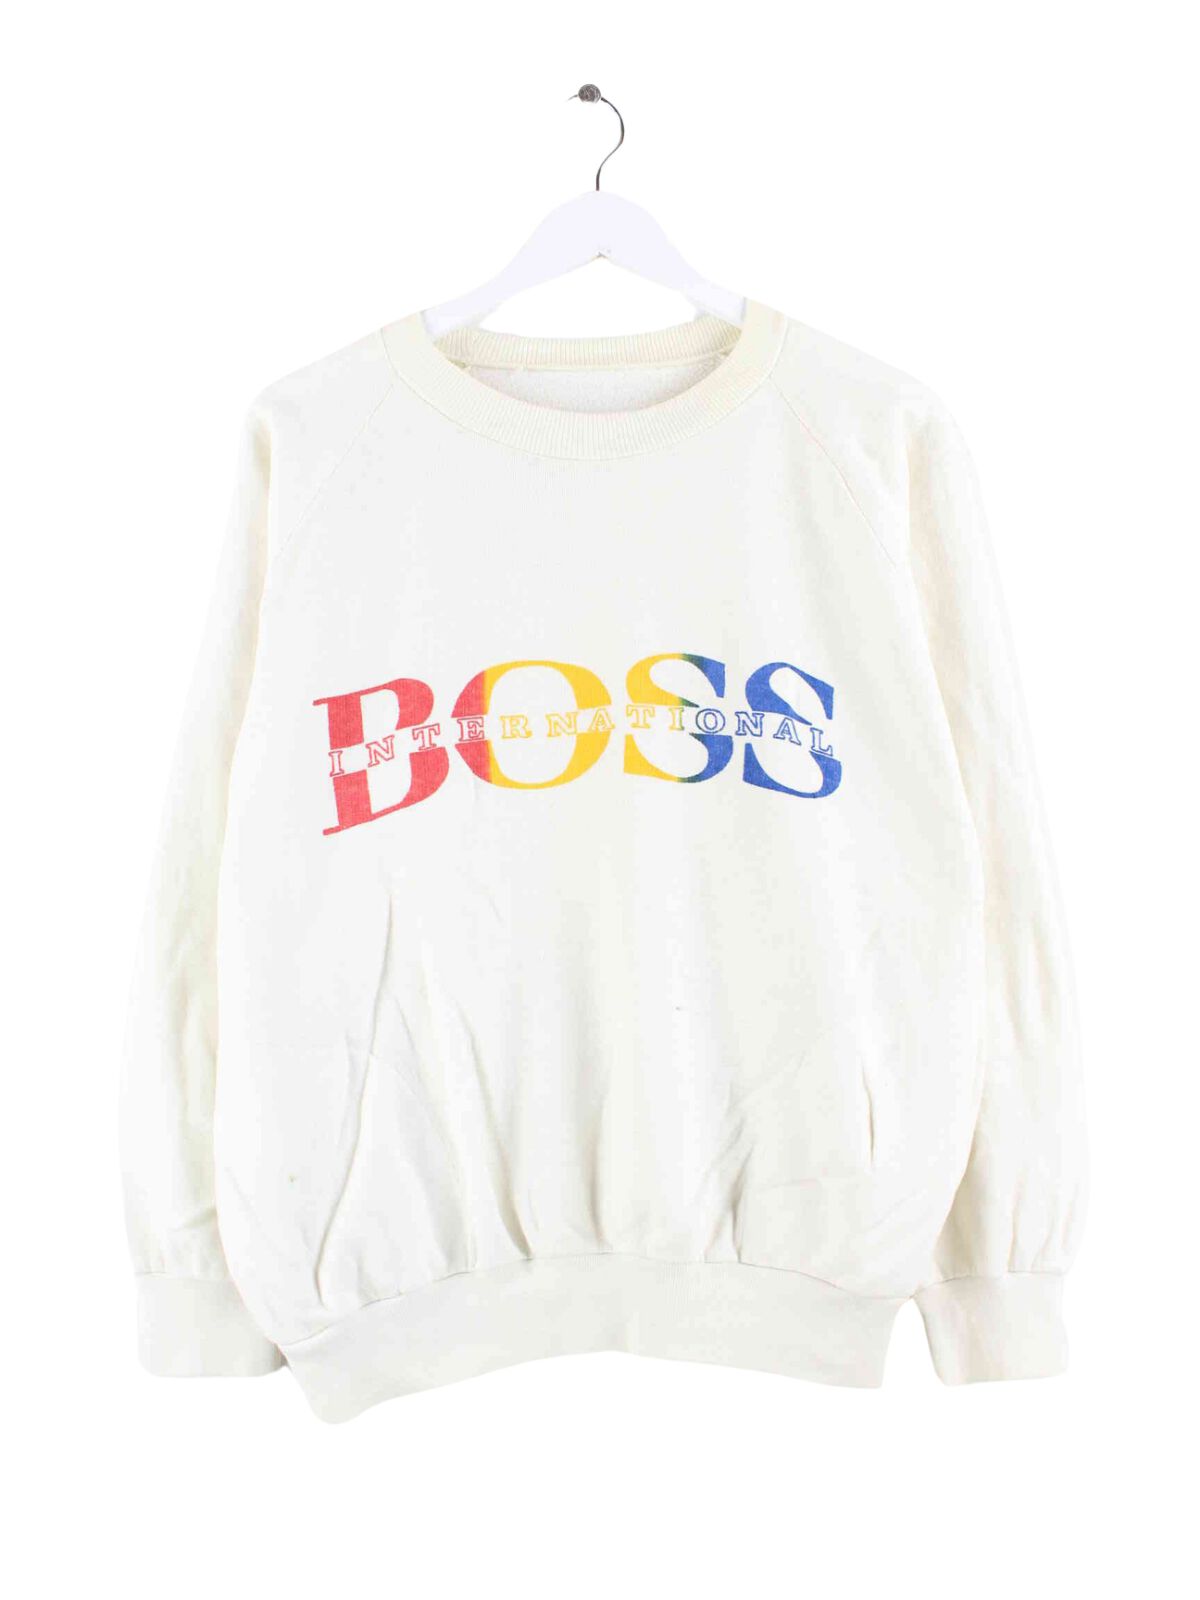 Hugo Boss 80s Vintage Print Sweater Beige S (front image)